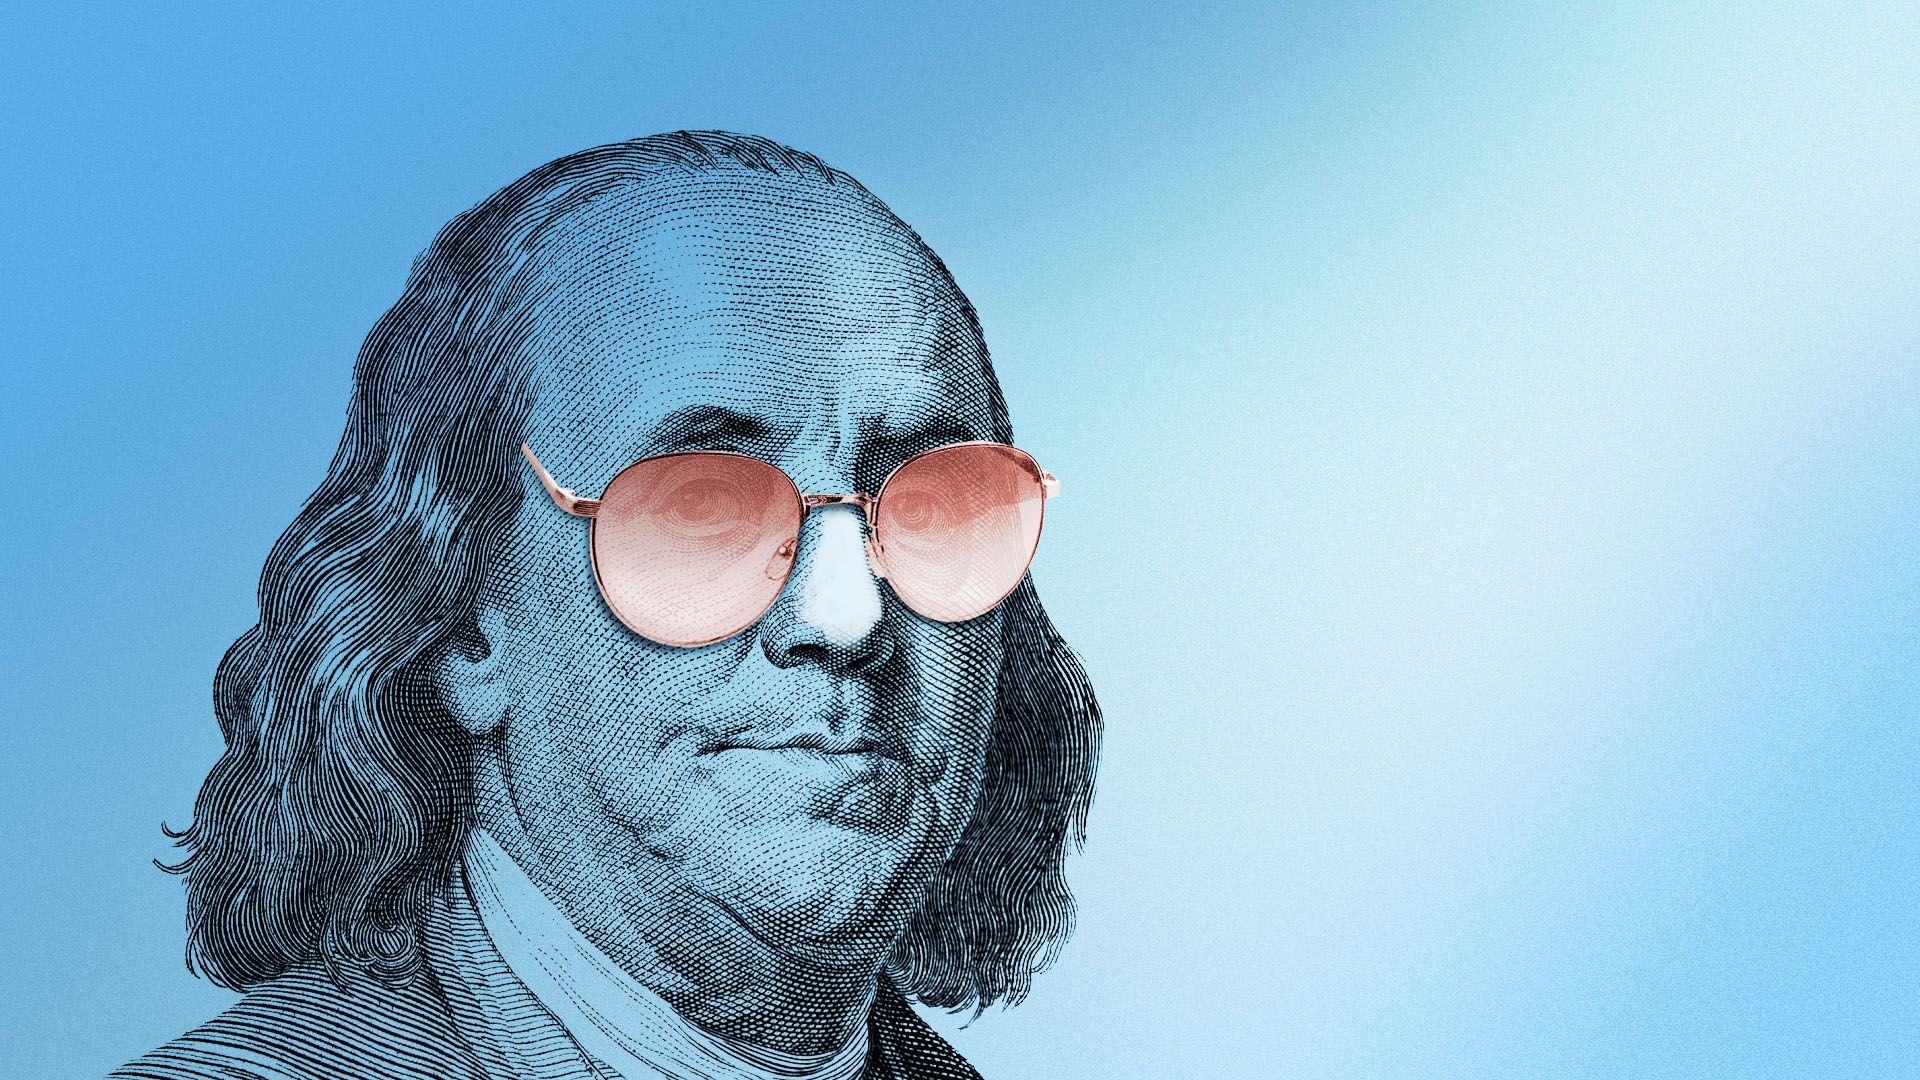 Illustration of Benjamin Franklin wearing sunglasses and sunscreen